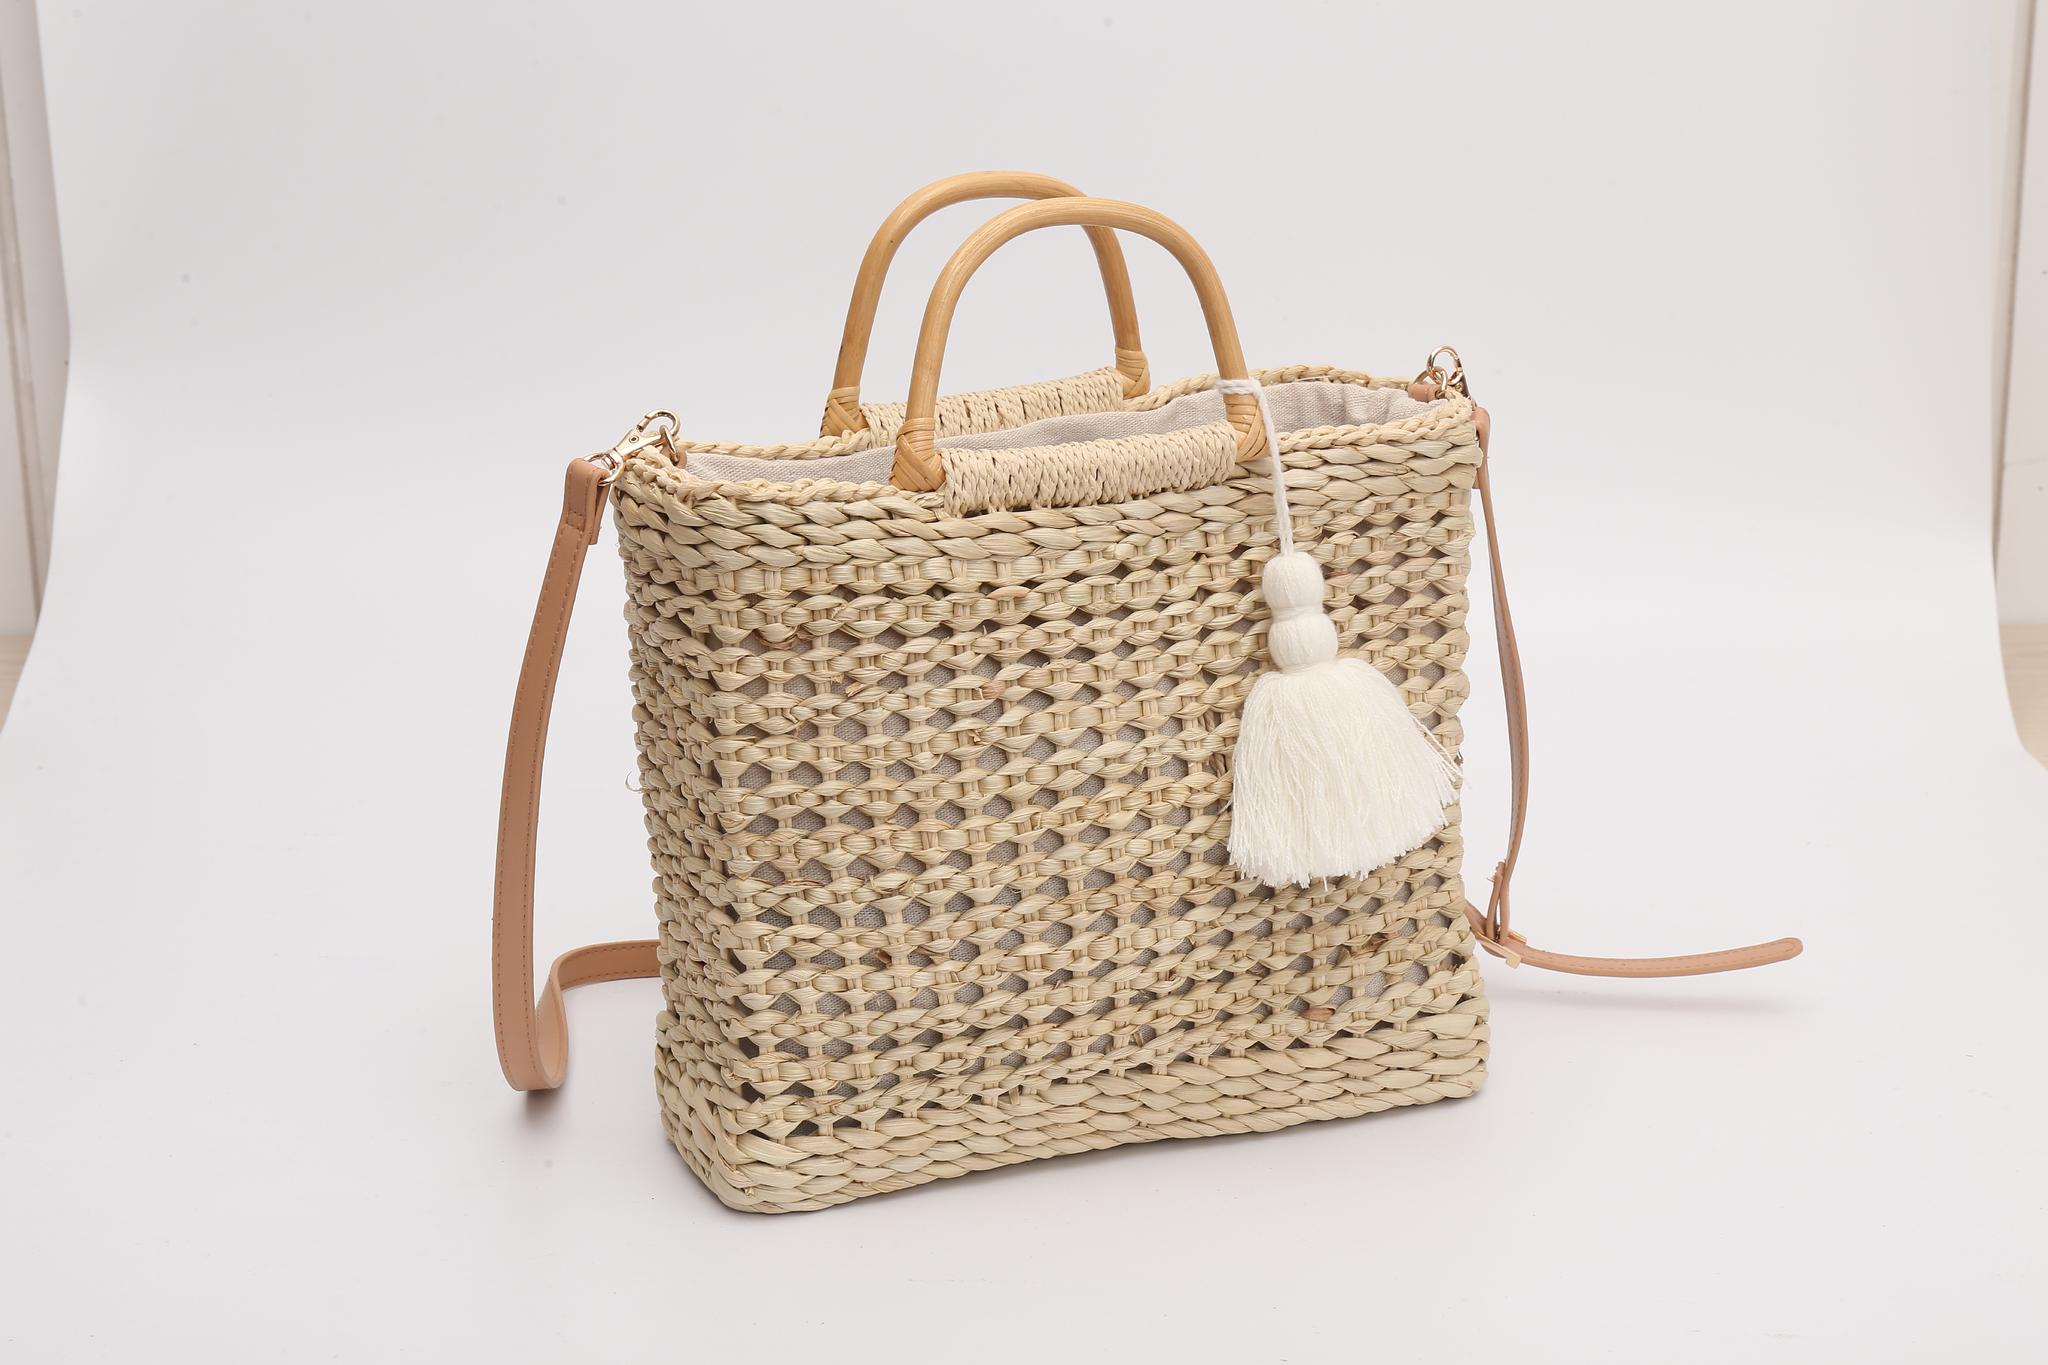 straw bag - Spring Fair 2021 - The UK's No.1 Gift & Home Trade Show